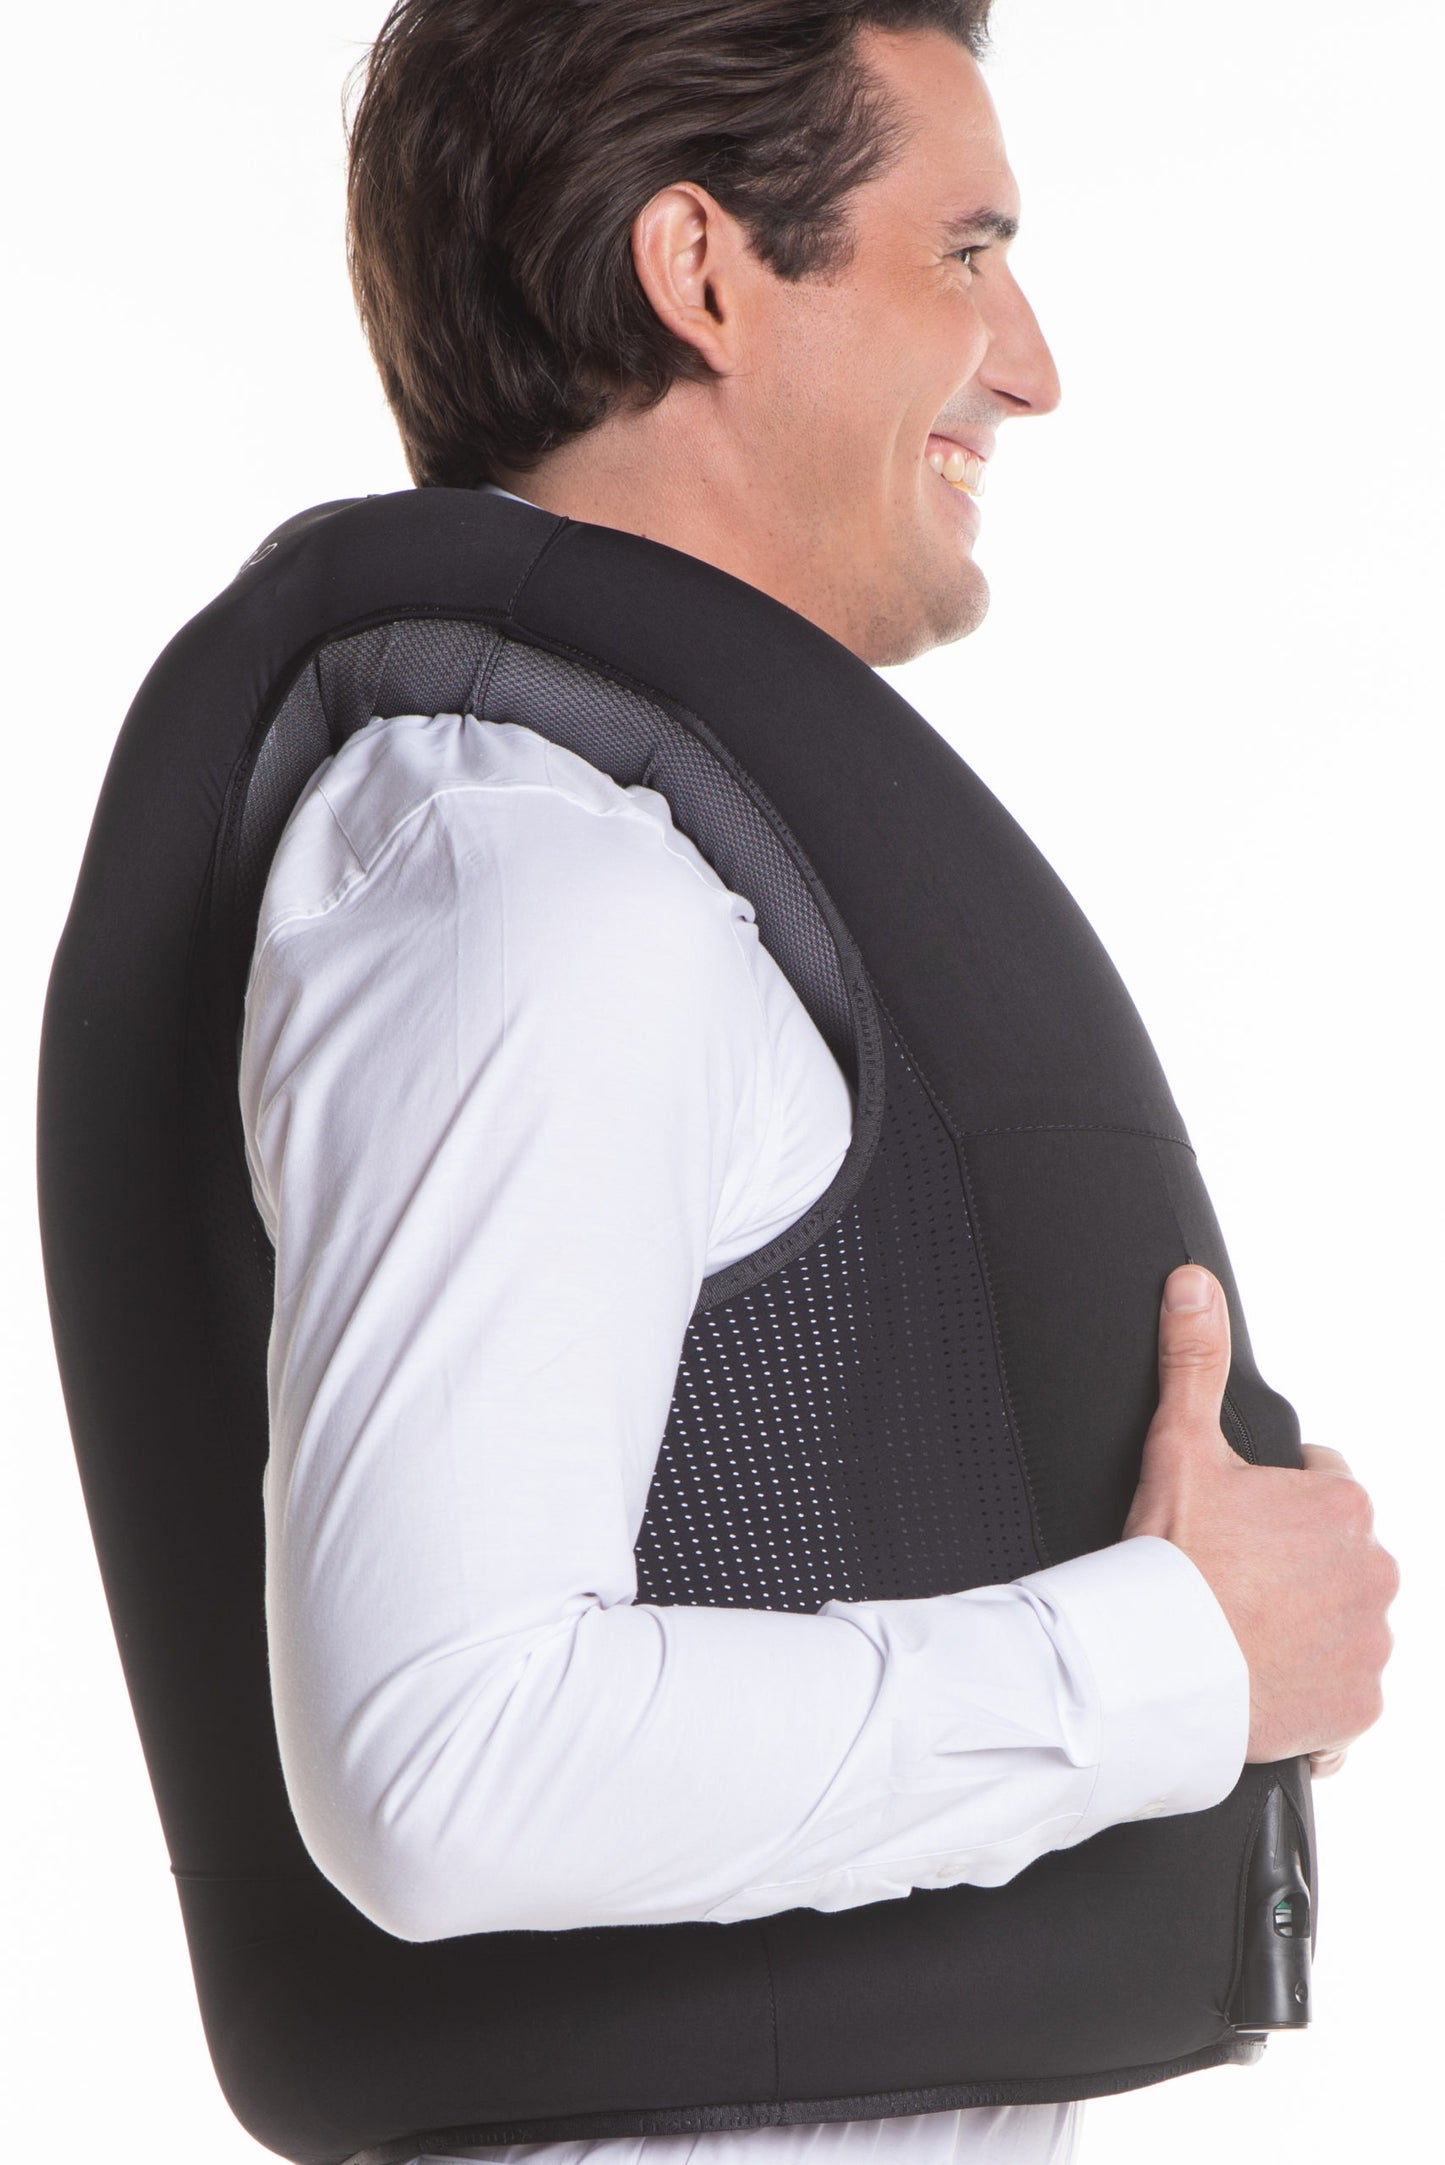 FreeJump Airbag Protective Vest